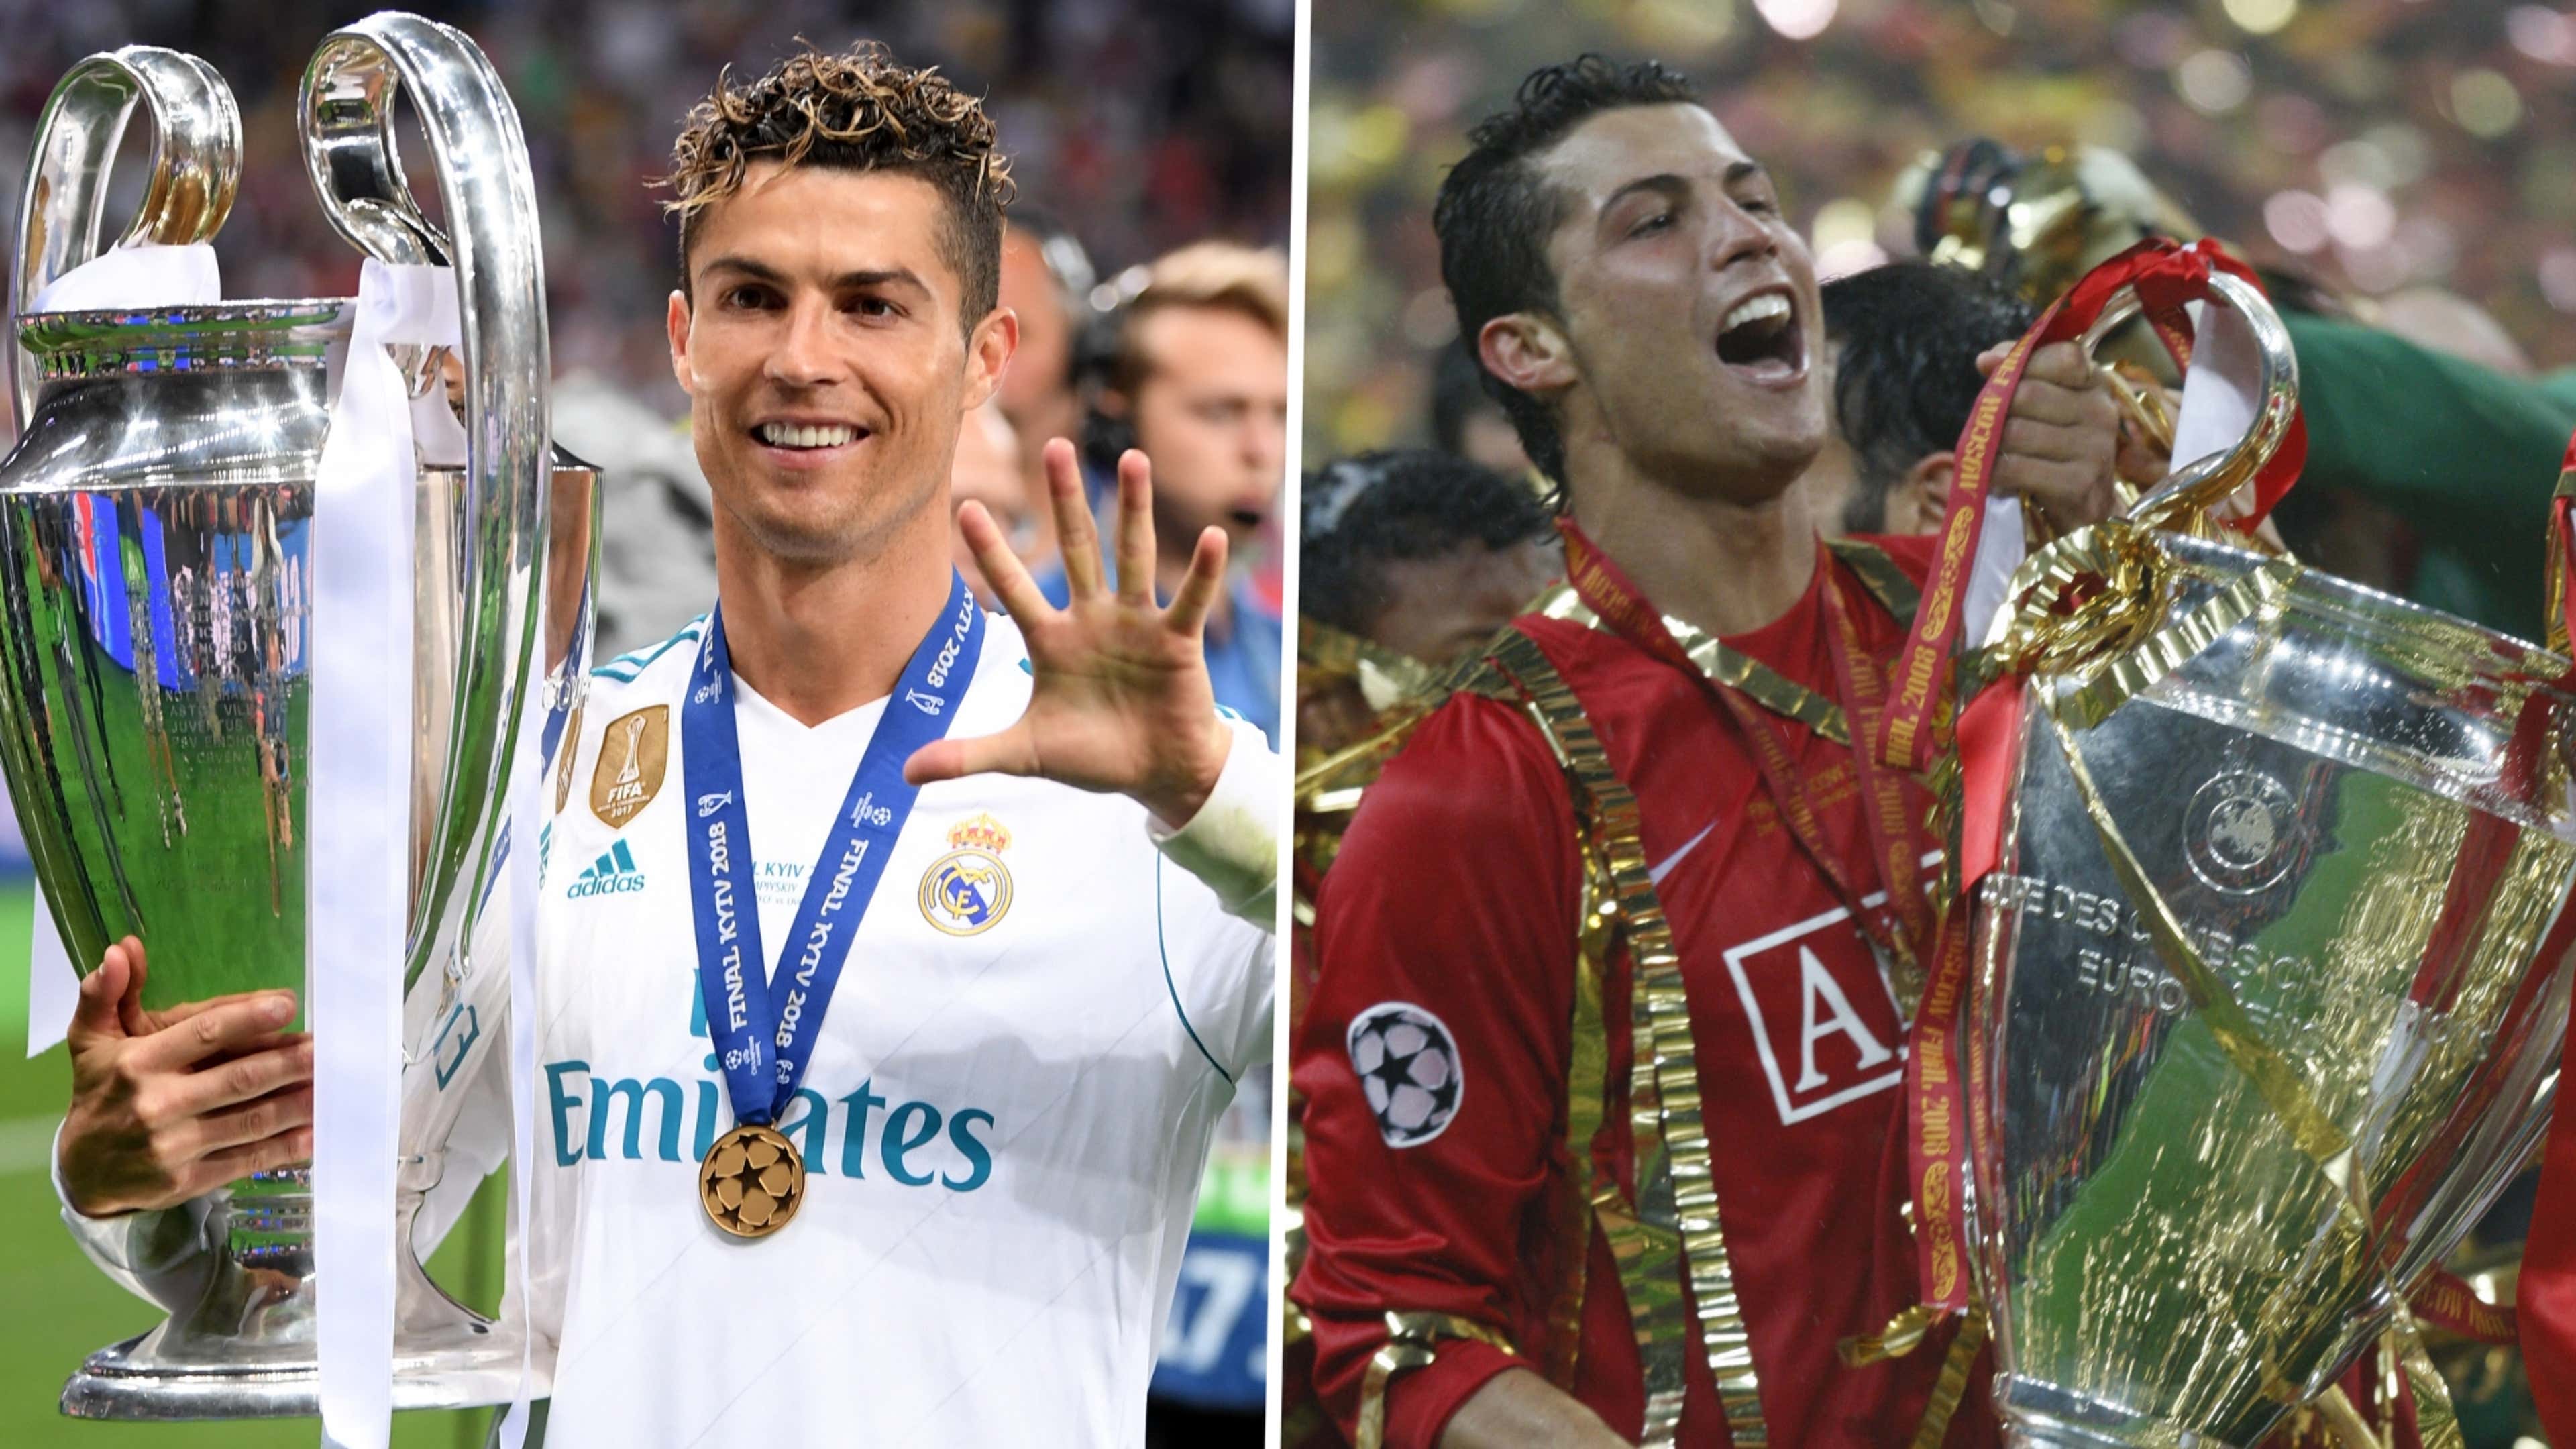 Cristiano Ronaldo trophies: How many career titles has CR7 won?